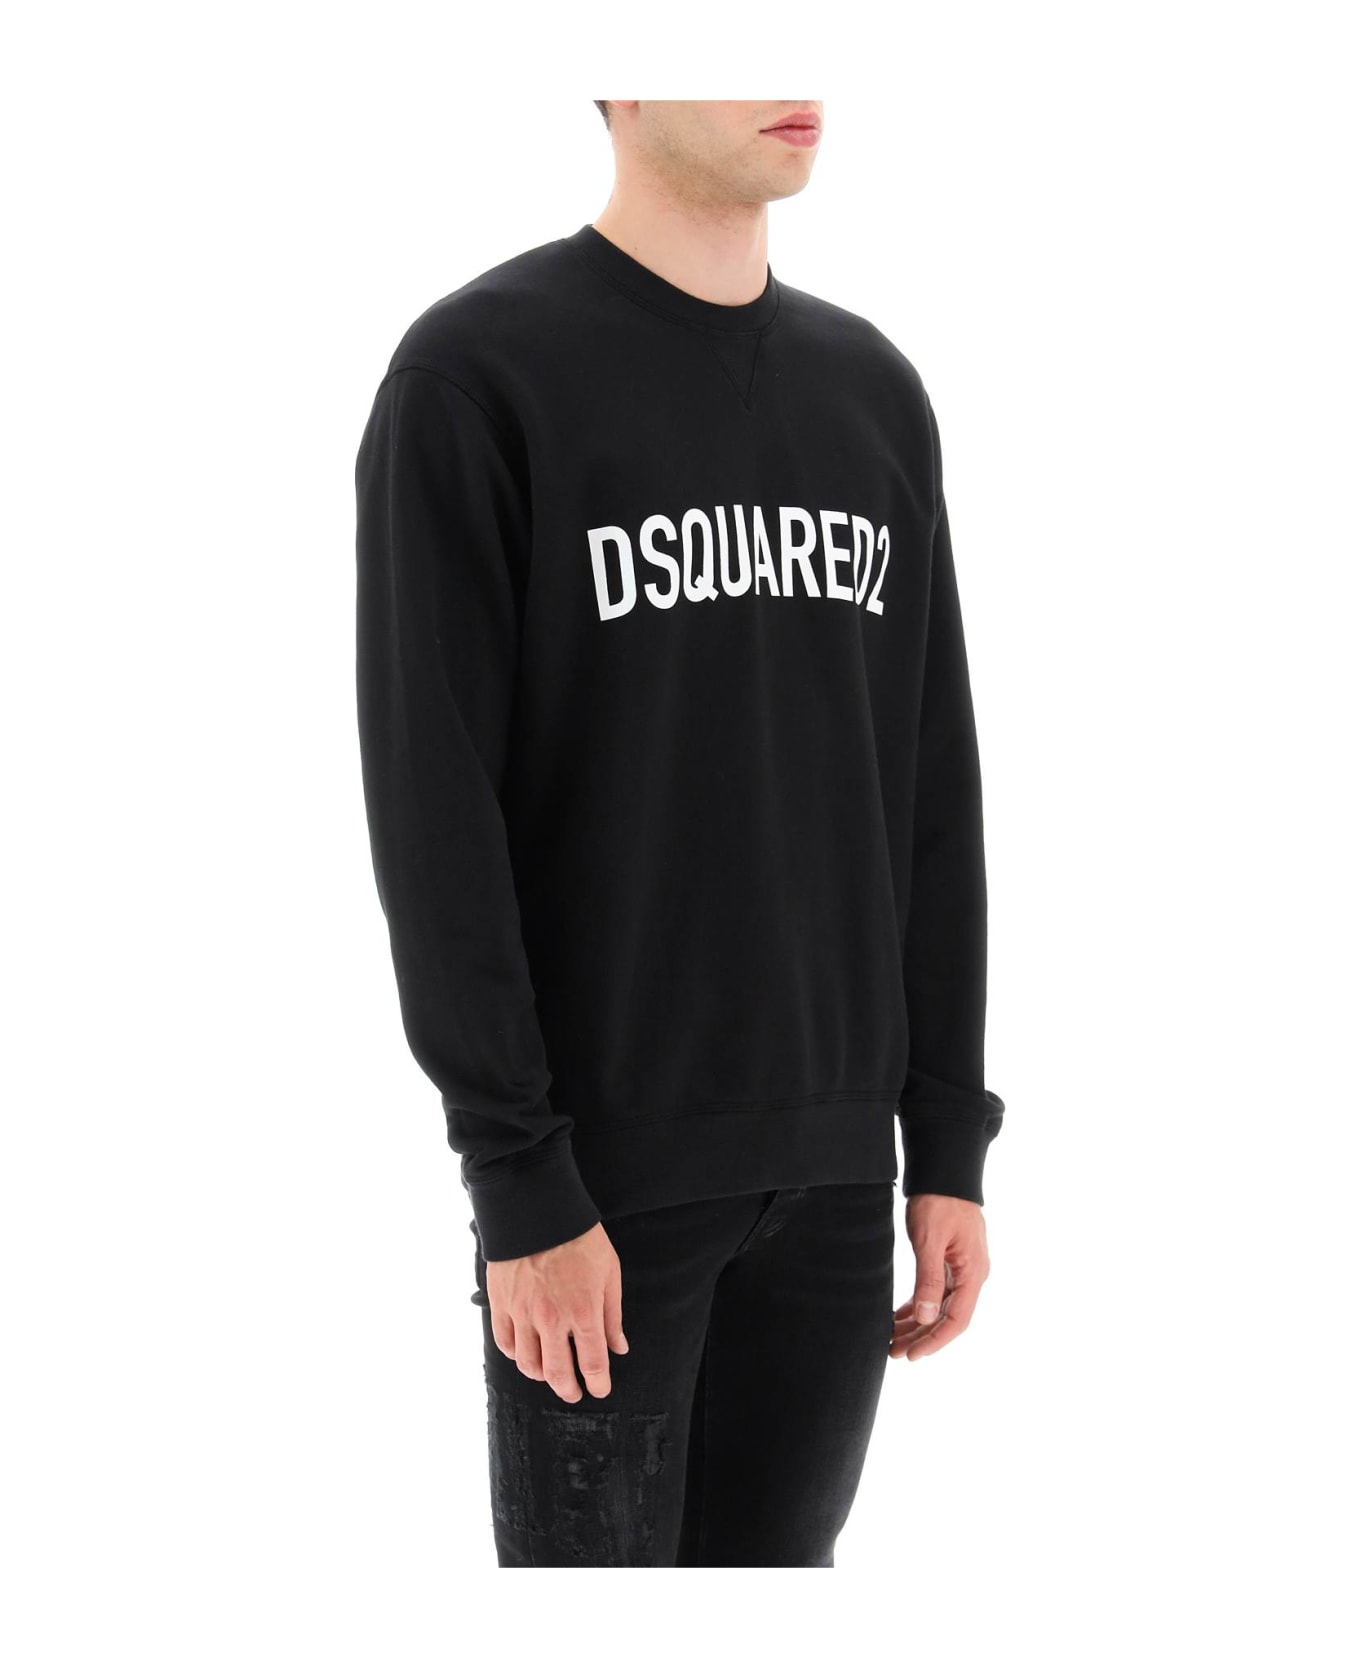 Dsquared2 Logo Printed Crewneck Sweatshirt - Black